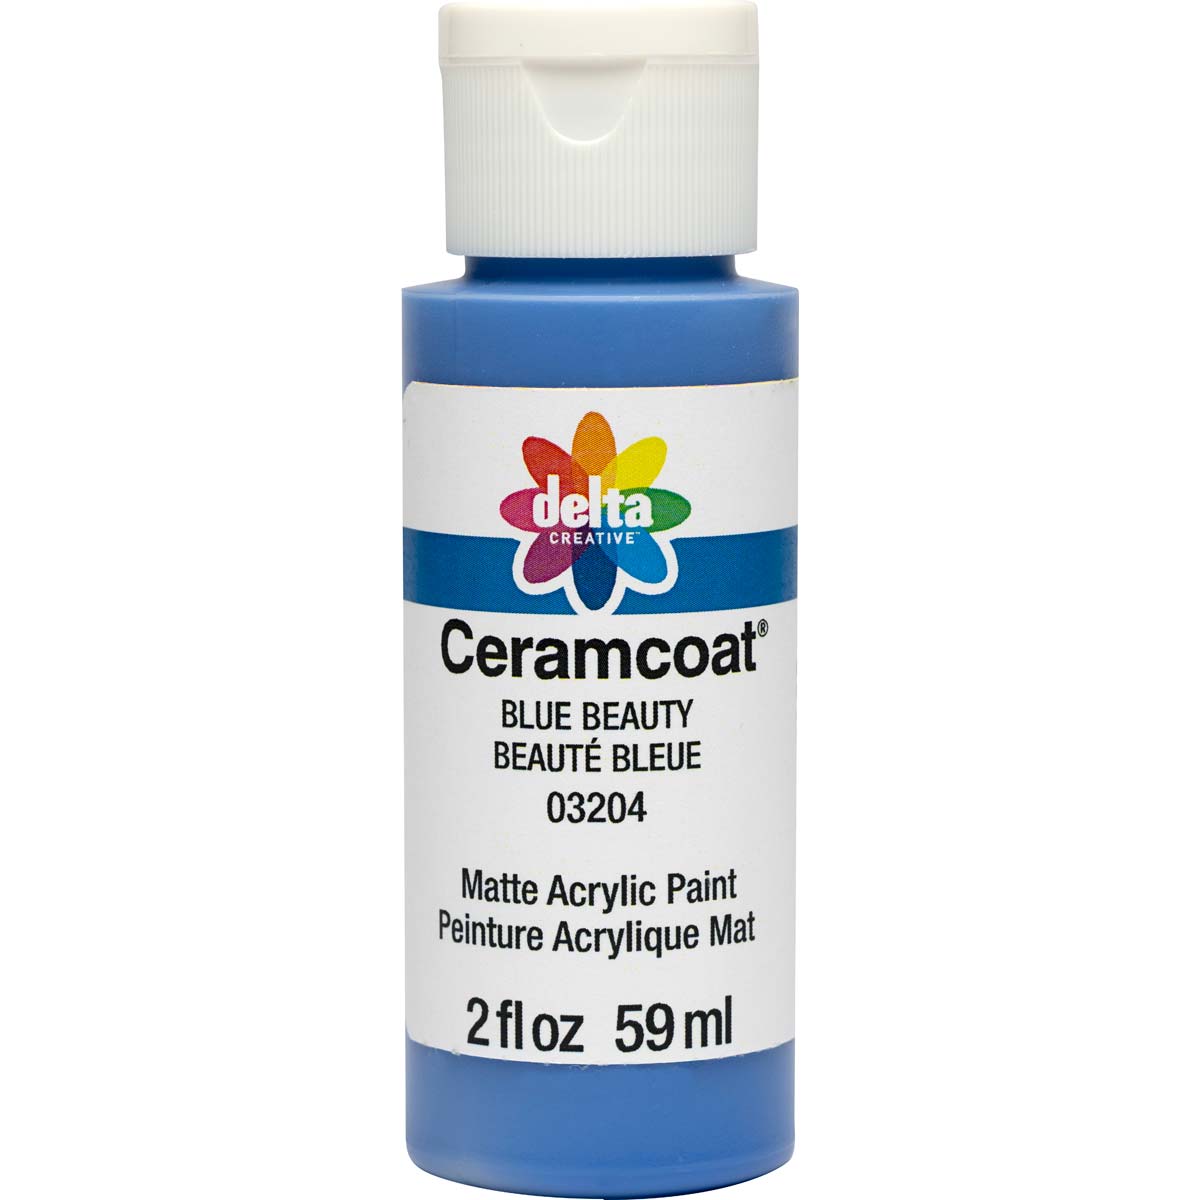 Delta Ceramcoat Acrylic Paint - Blue Beauty, 2 oz. - 03204